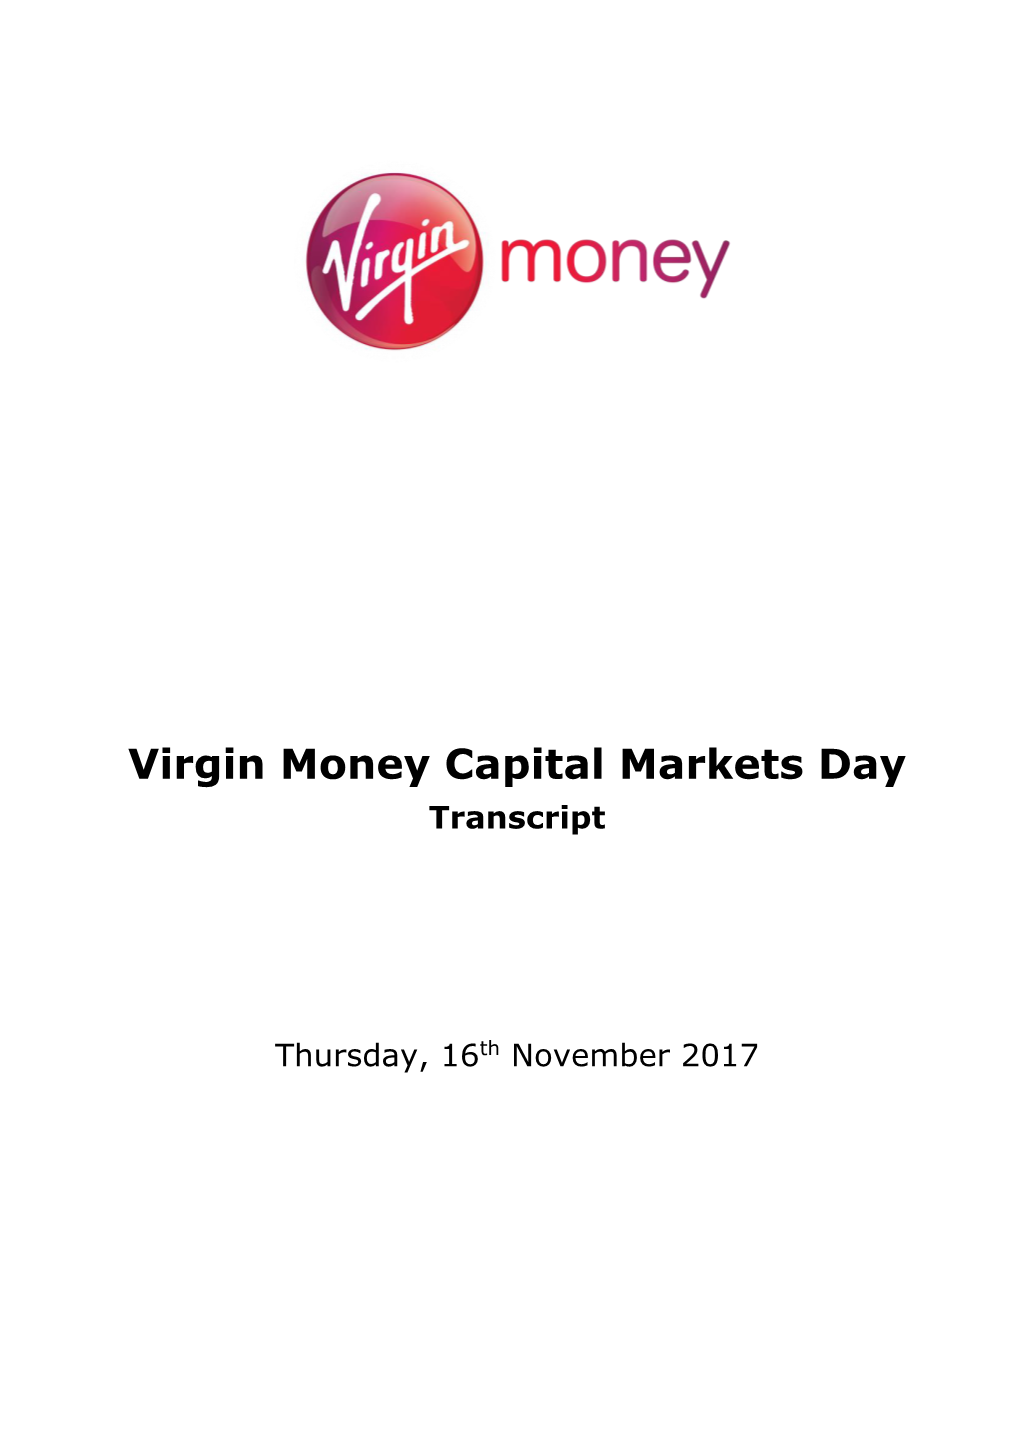 Virgin Money Capital Markets Day Transcript